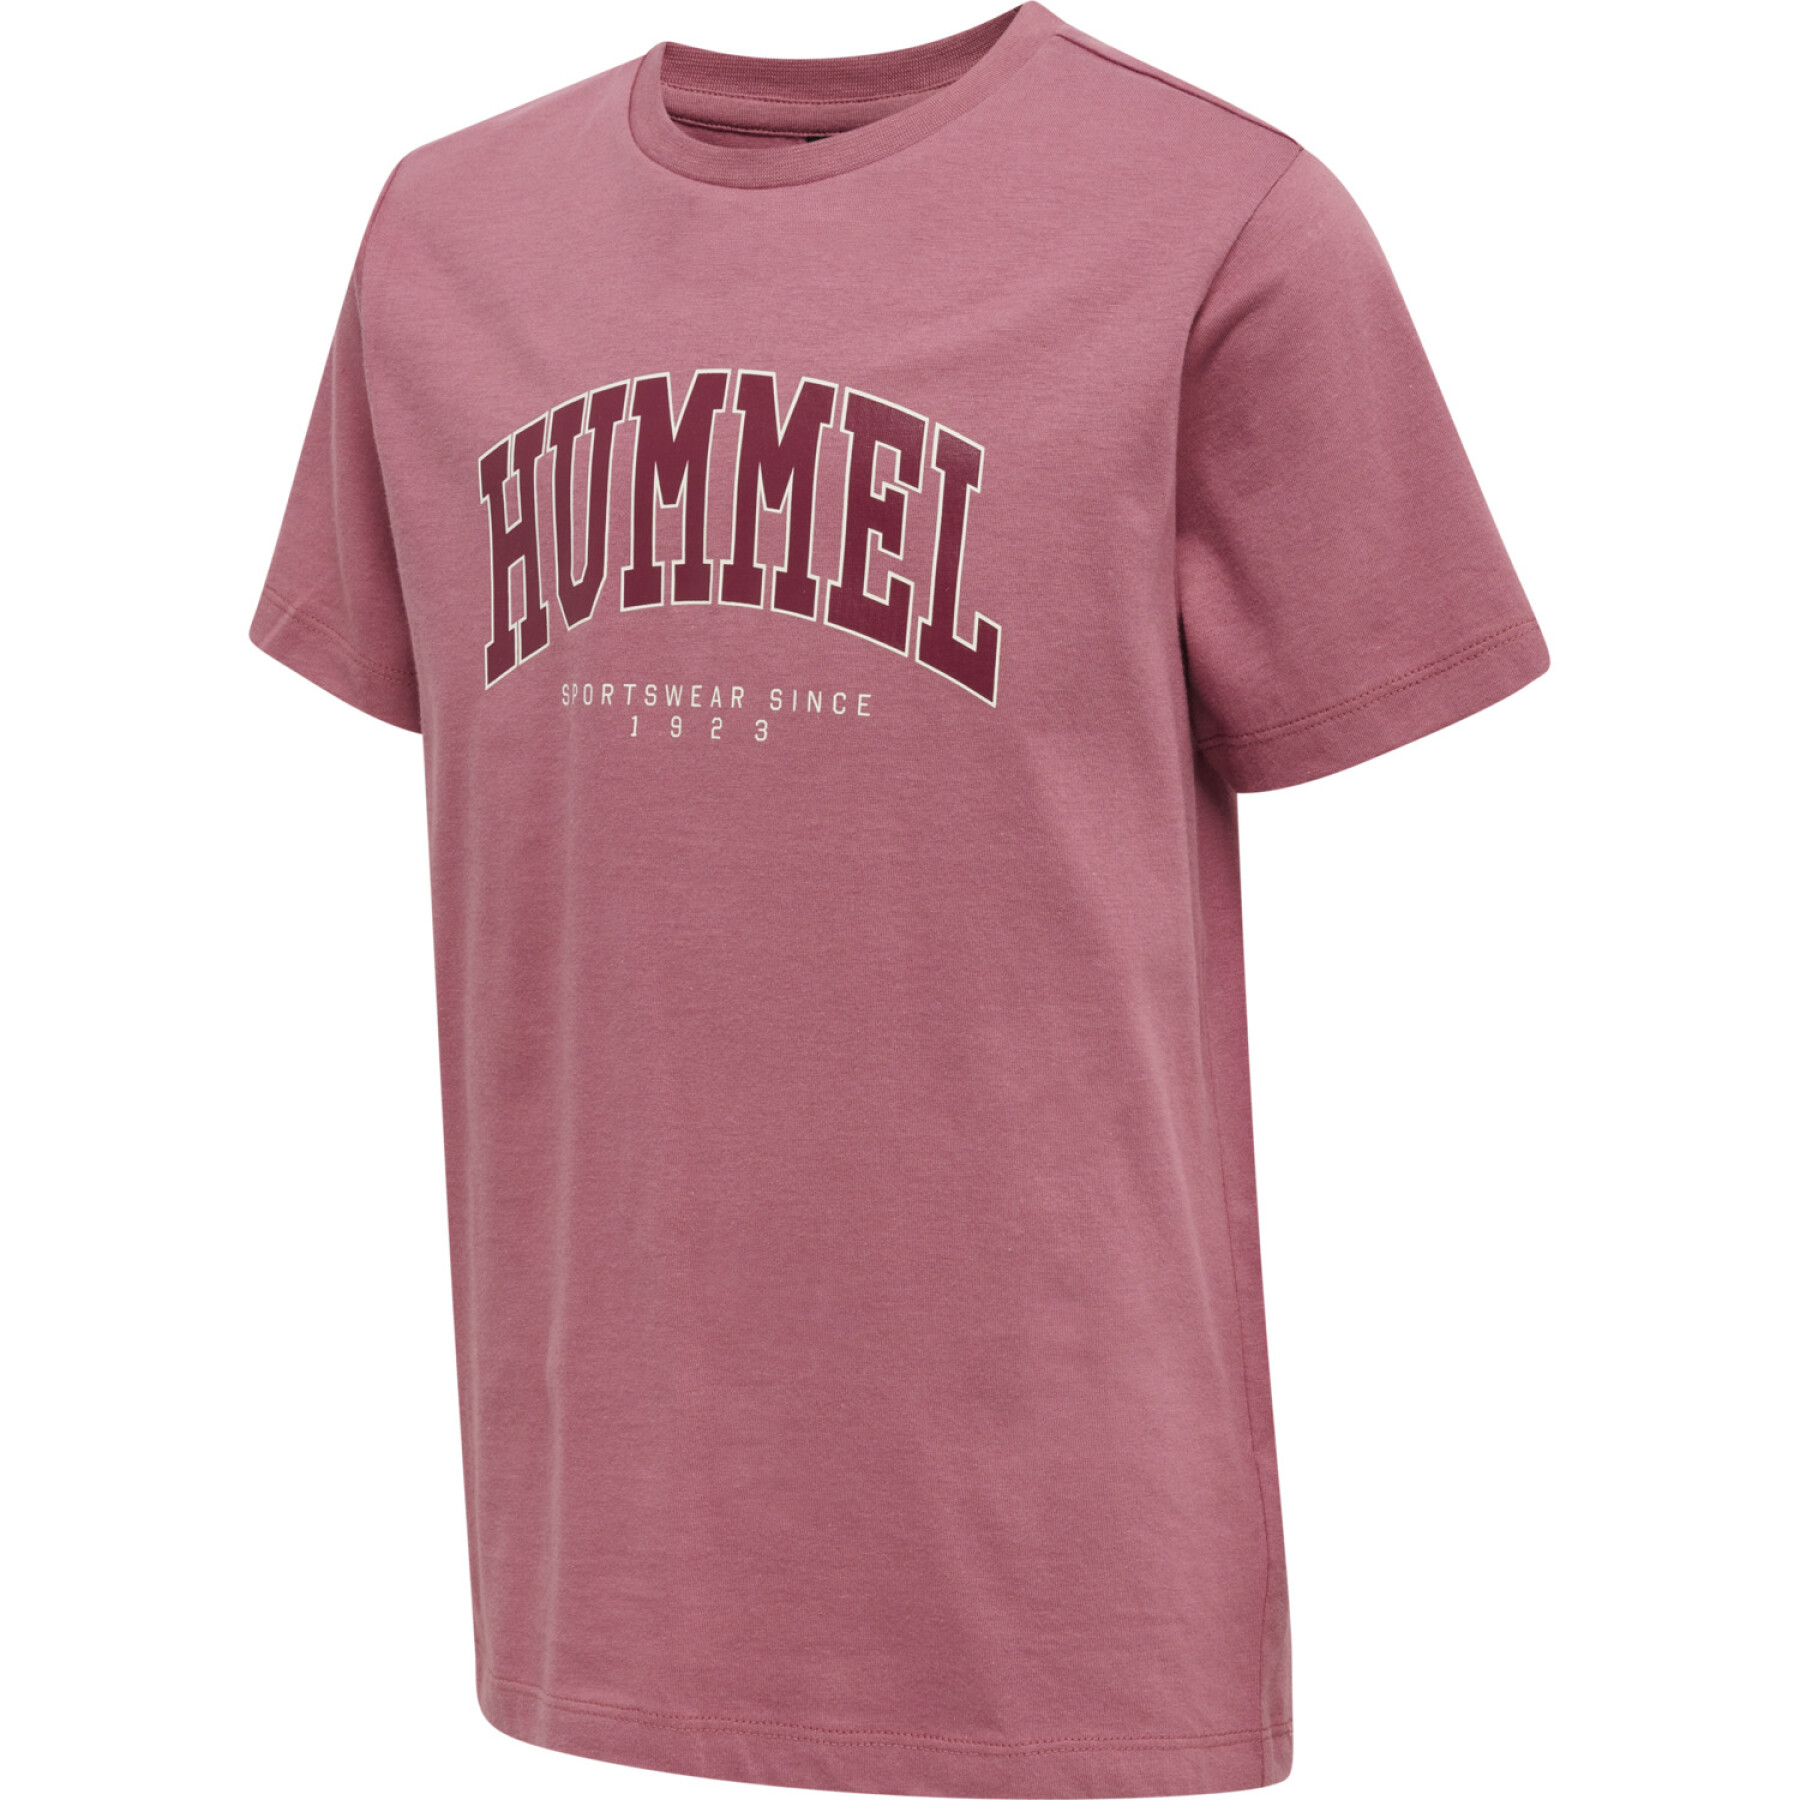 Kinder-T-shirt Hummel Fast